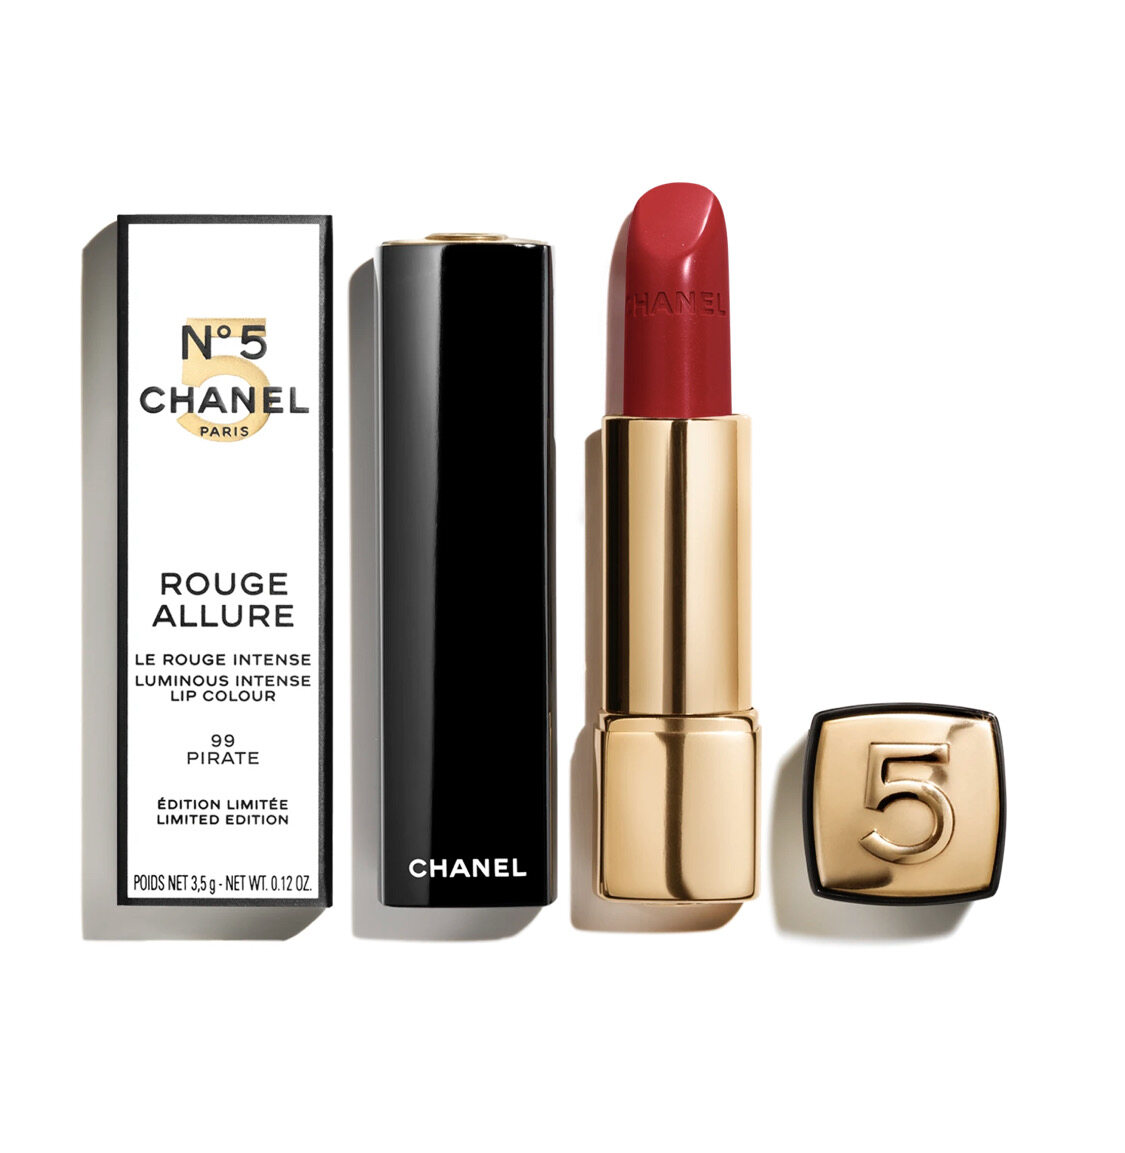 Chanel Rouge Allure Velvet La Distinguée 33 and La Furtive 31 - The Beauty  Look Book